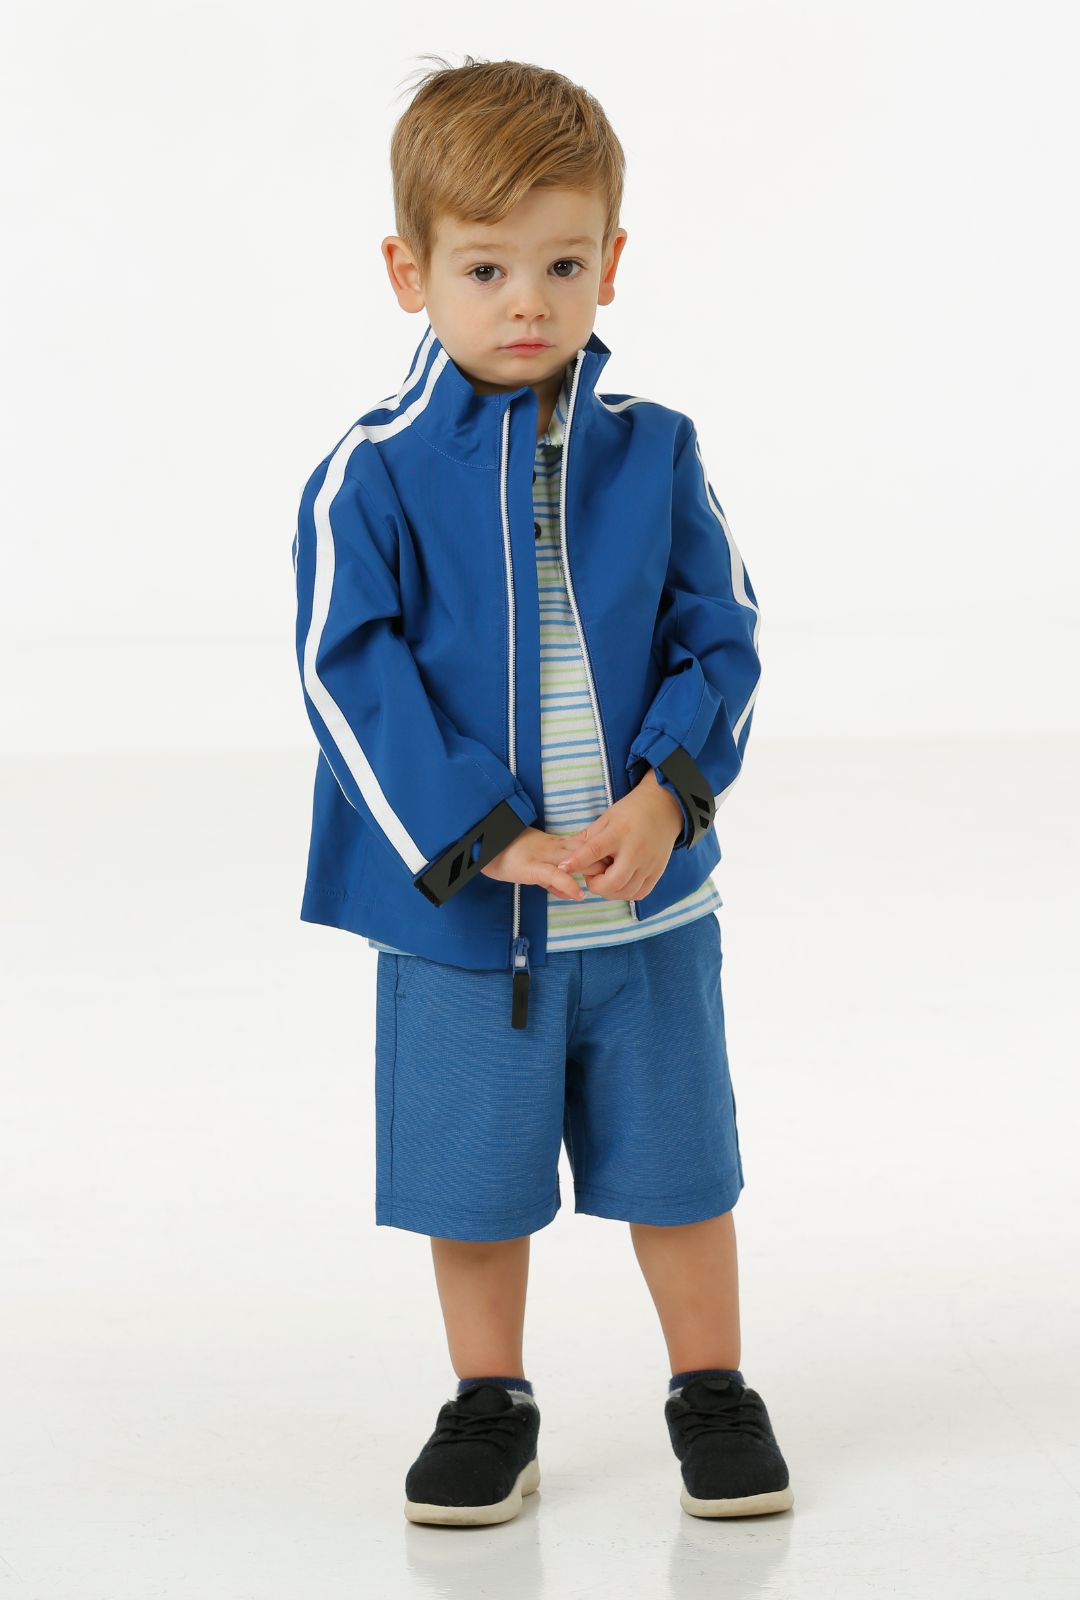 Daniel Toddler Boys' Water Resistant Jacket